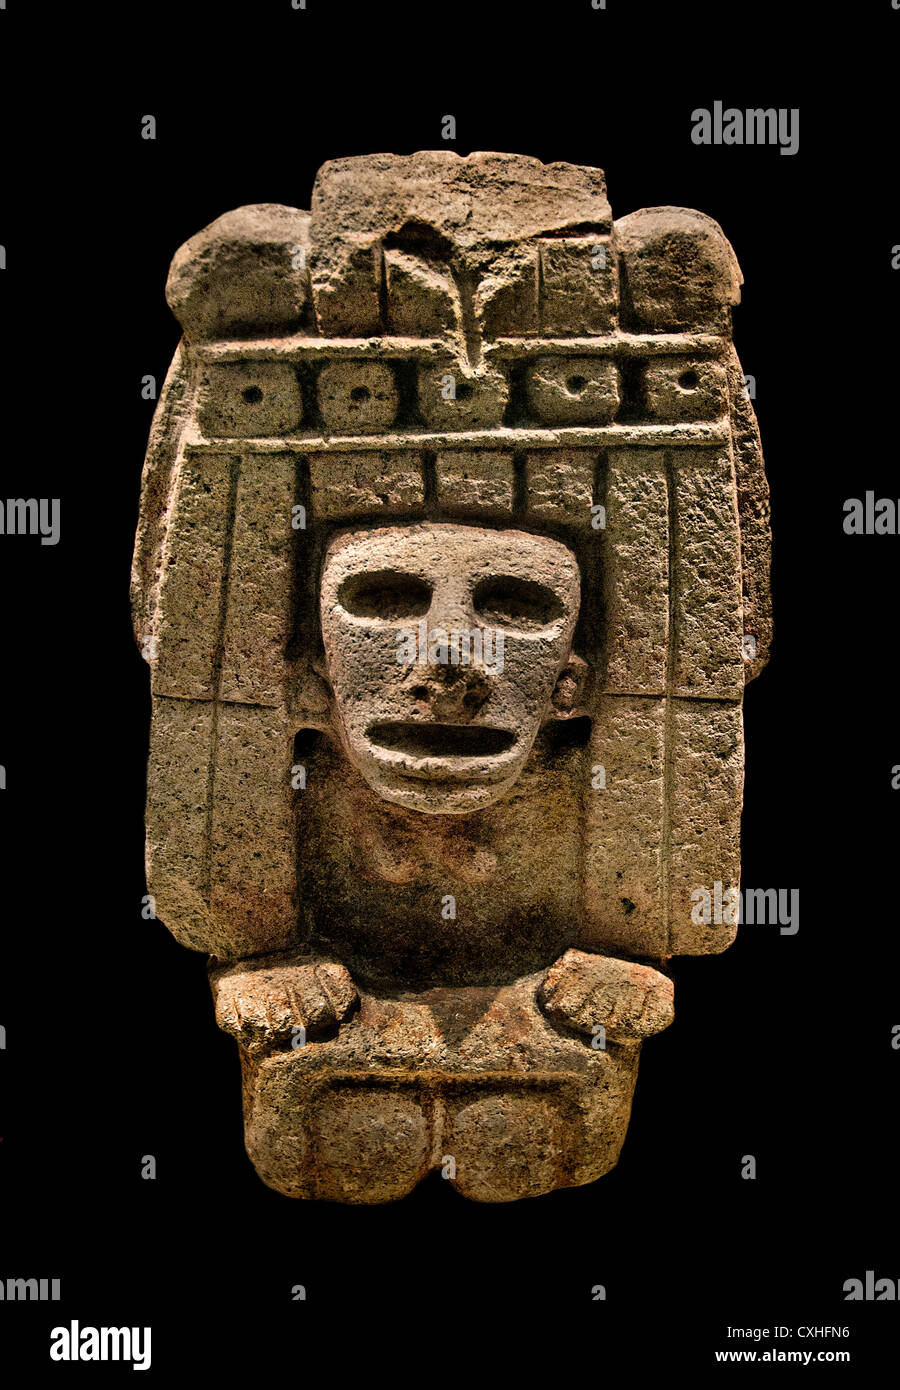 Maize Deity Chicomecoat 15th century  Mexico Mesoamerica Aztec Basalt 35.56 x  cm Stock Photo